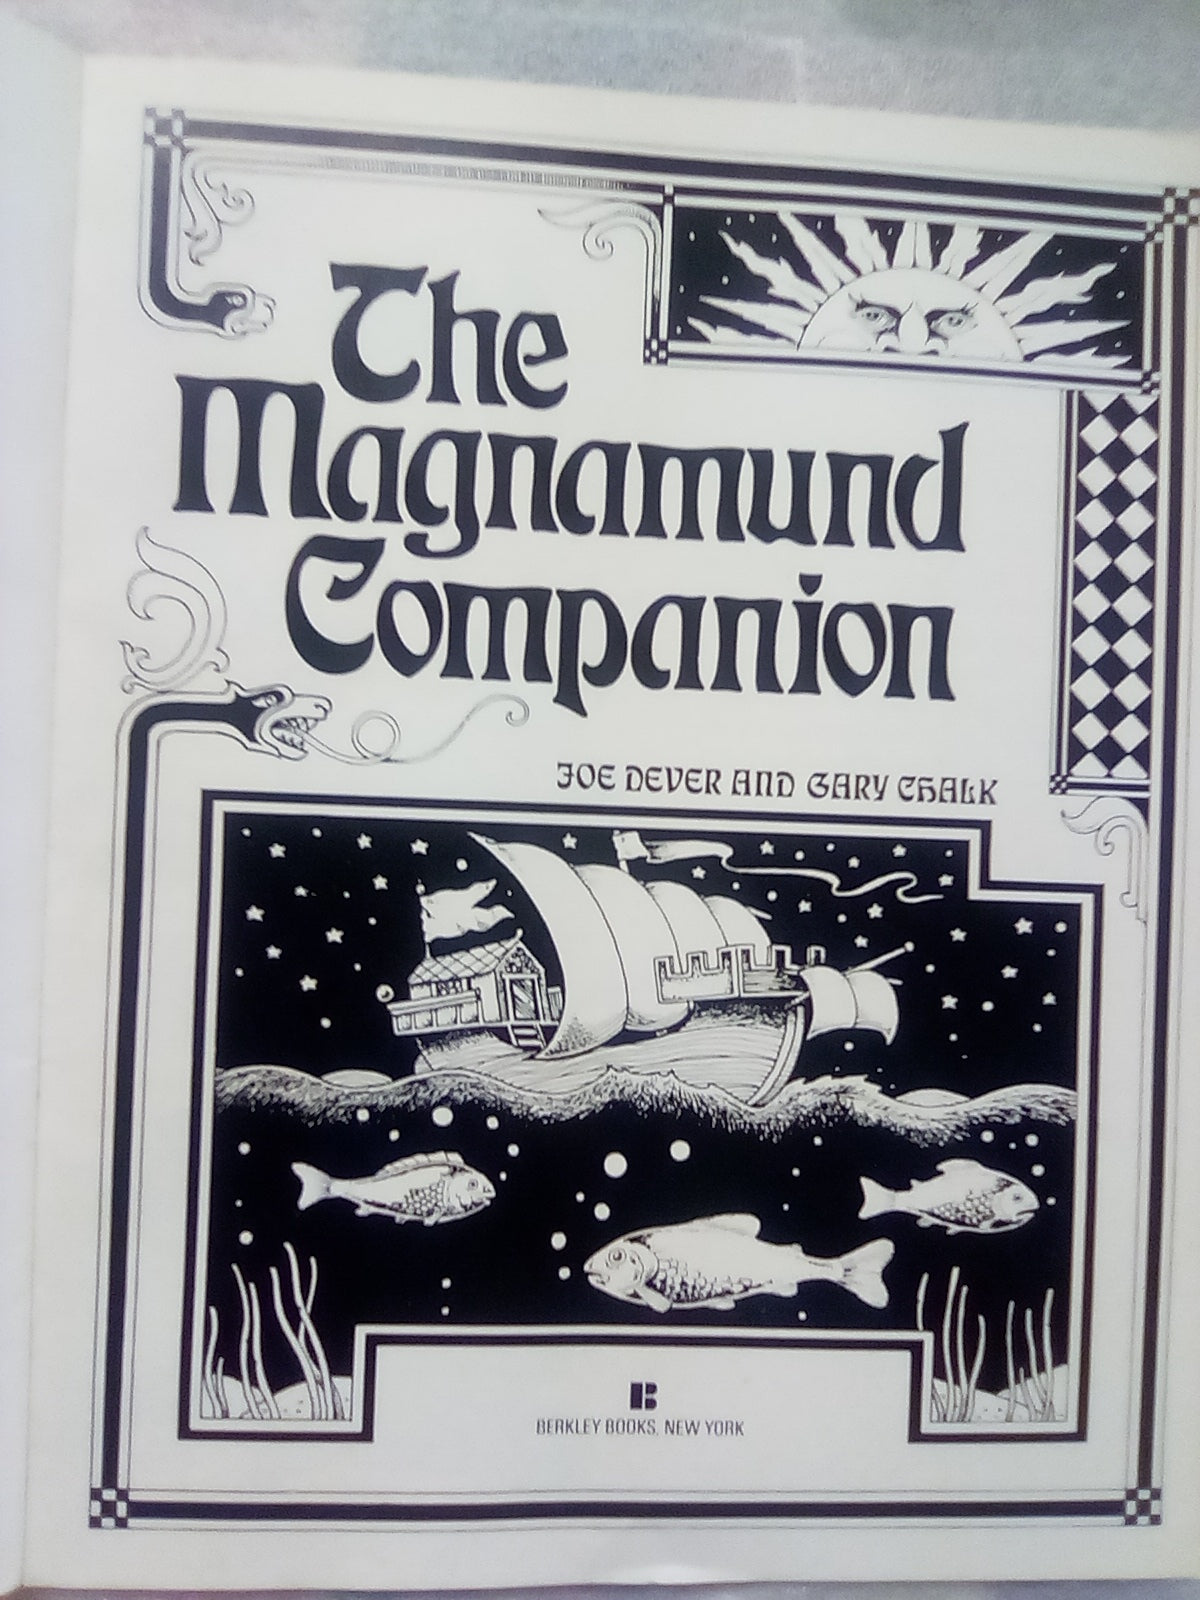 Lone Wolf & Grey Star - The Magnamund Companion by Joe Dever & Gary Chalk